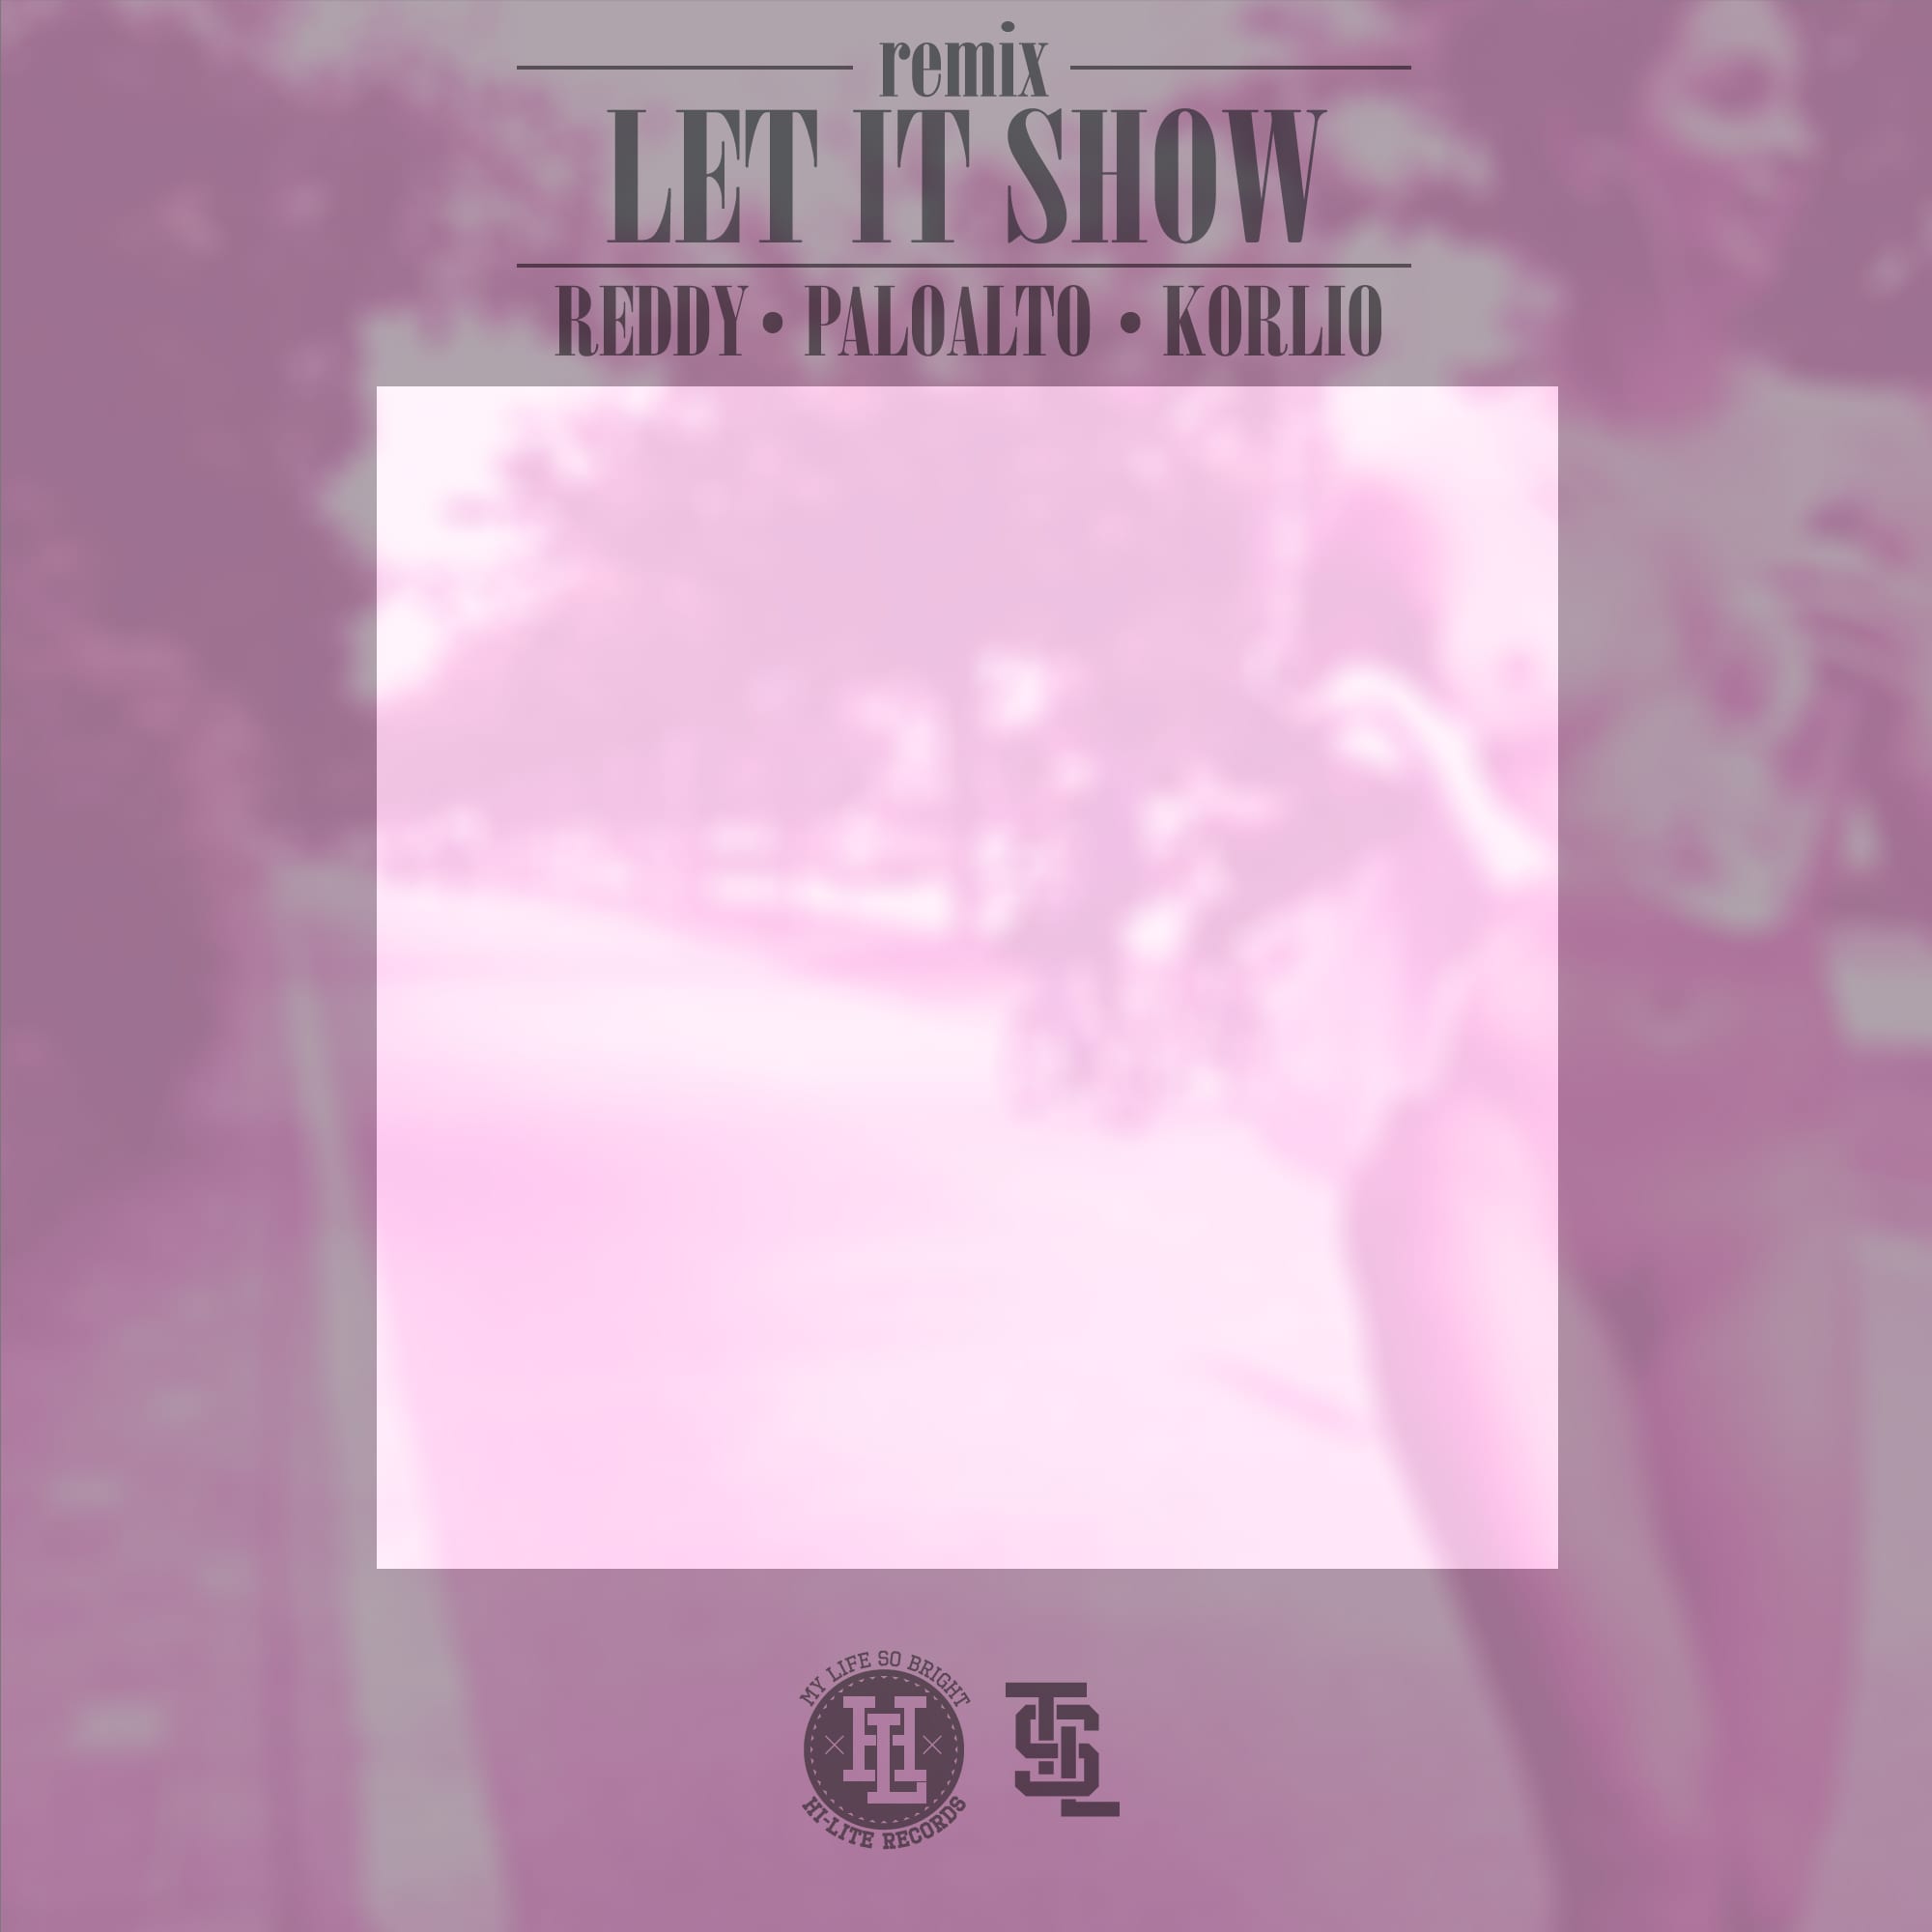 Reddy, Paloalto, Korlio - Let It Show Remix cover